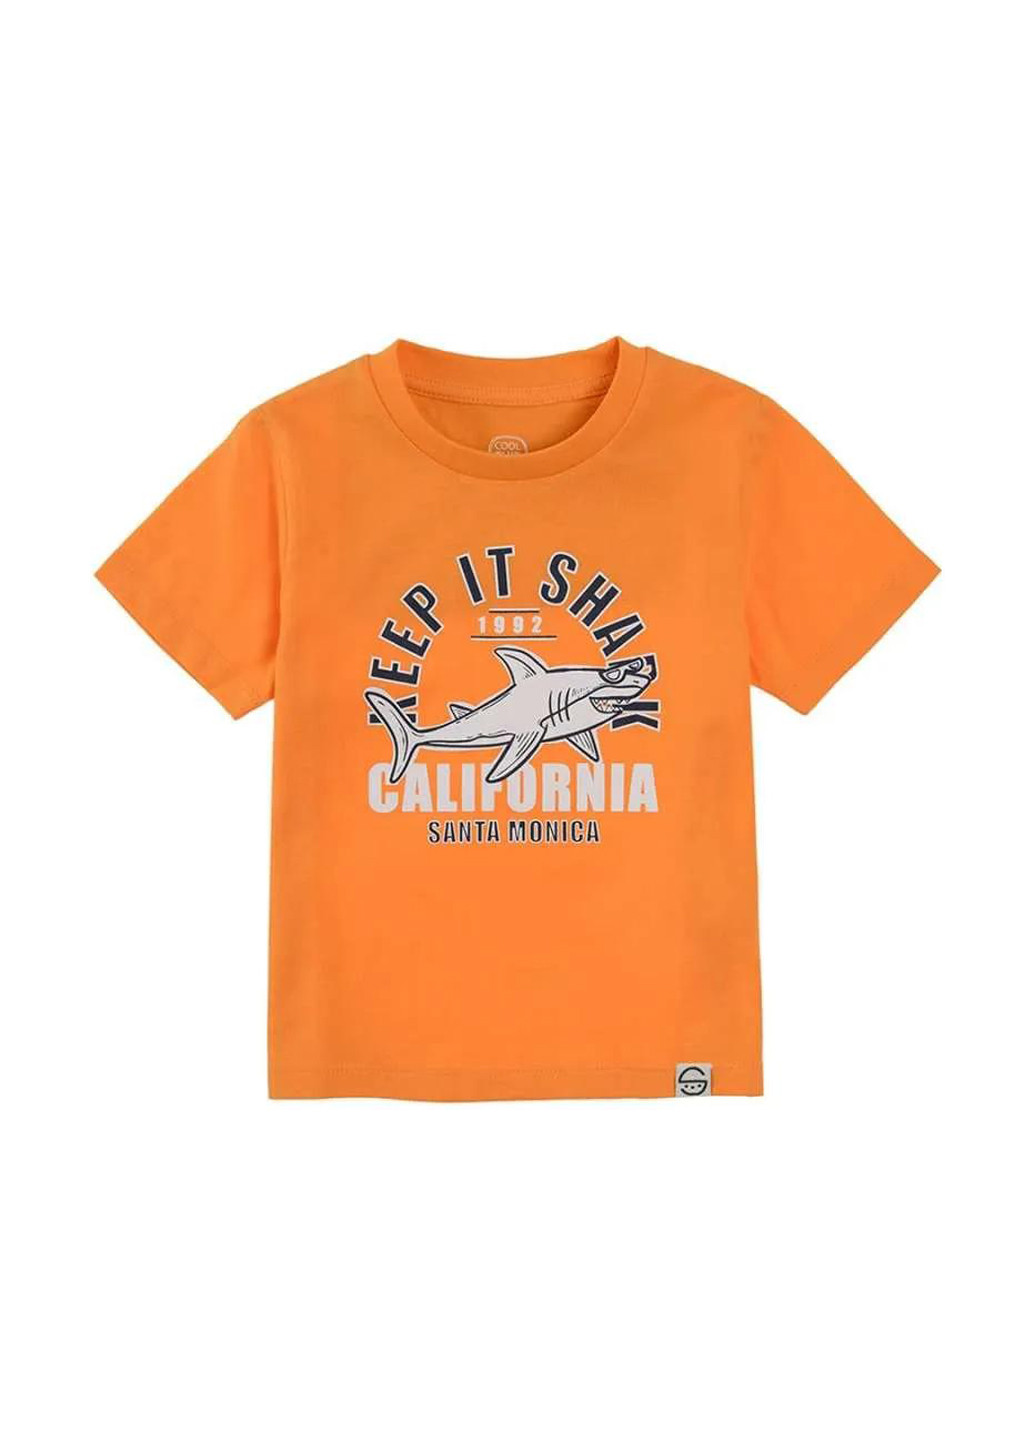 Оранжевая летняя футболка Cool Club